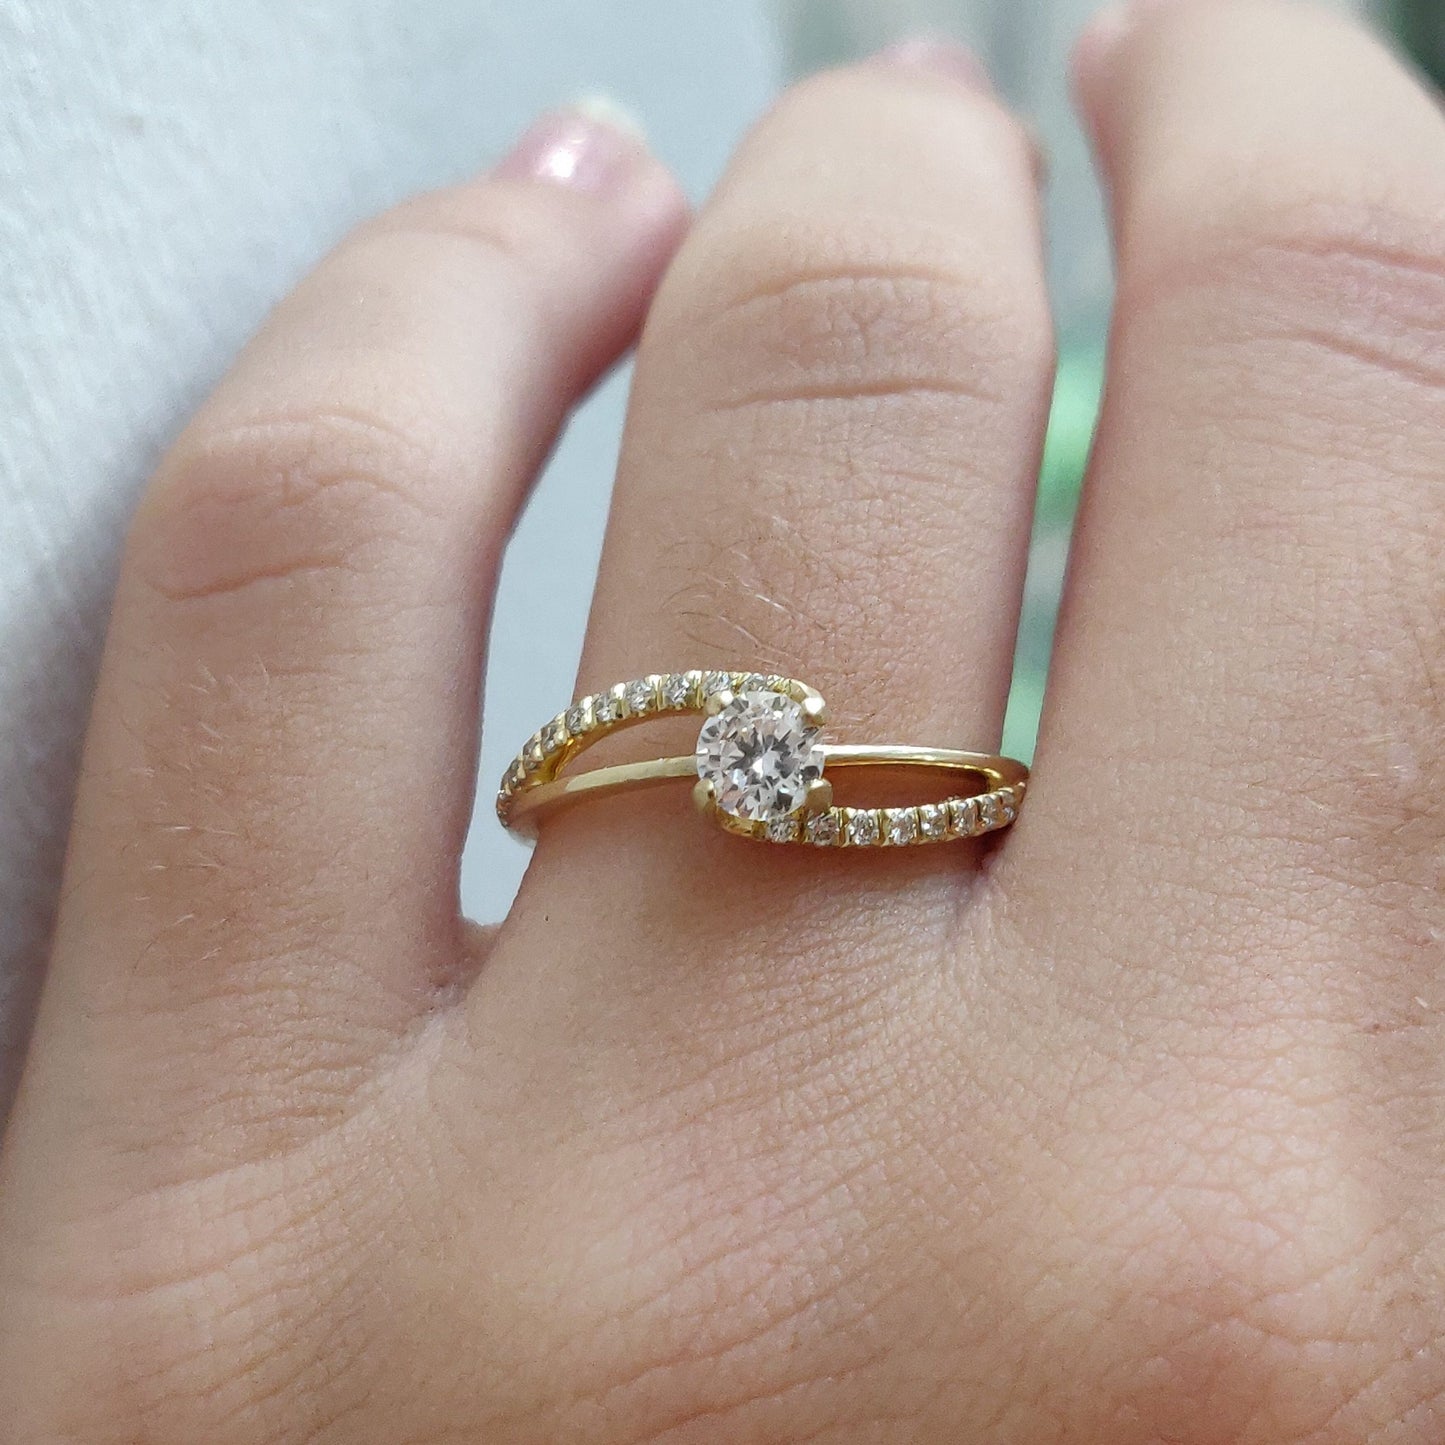 Amazing Quality,Center Diamond , Total diamond wt. 0.18ct. 14K OR 18K Gold Engagement Engagement Wedding Anniversary Gift Ring